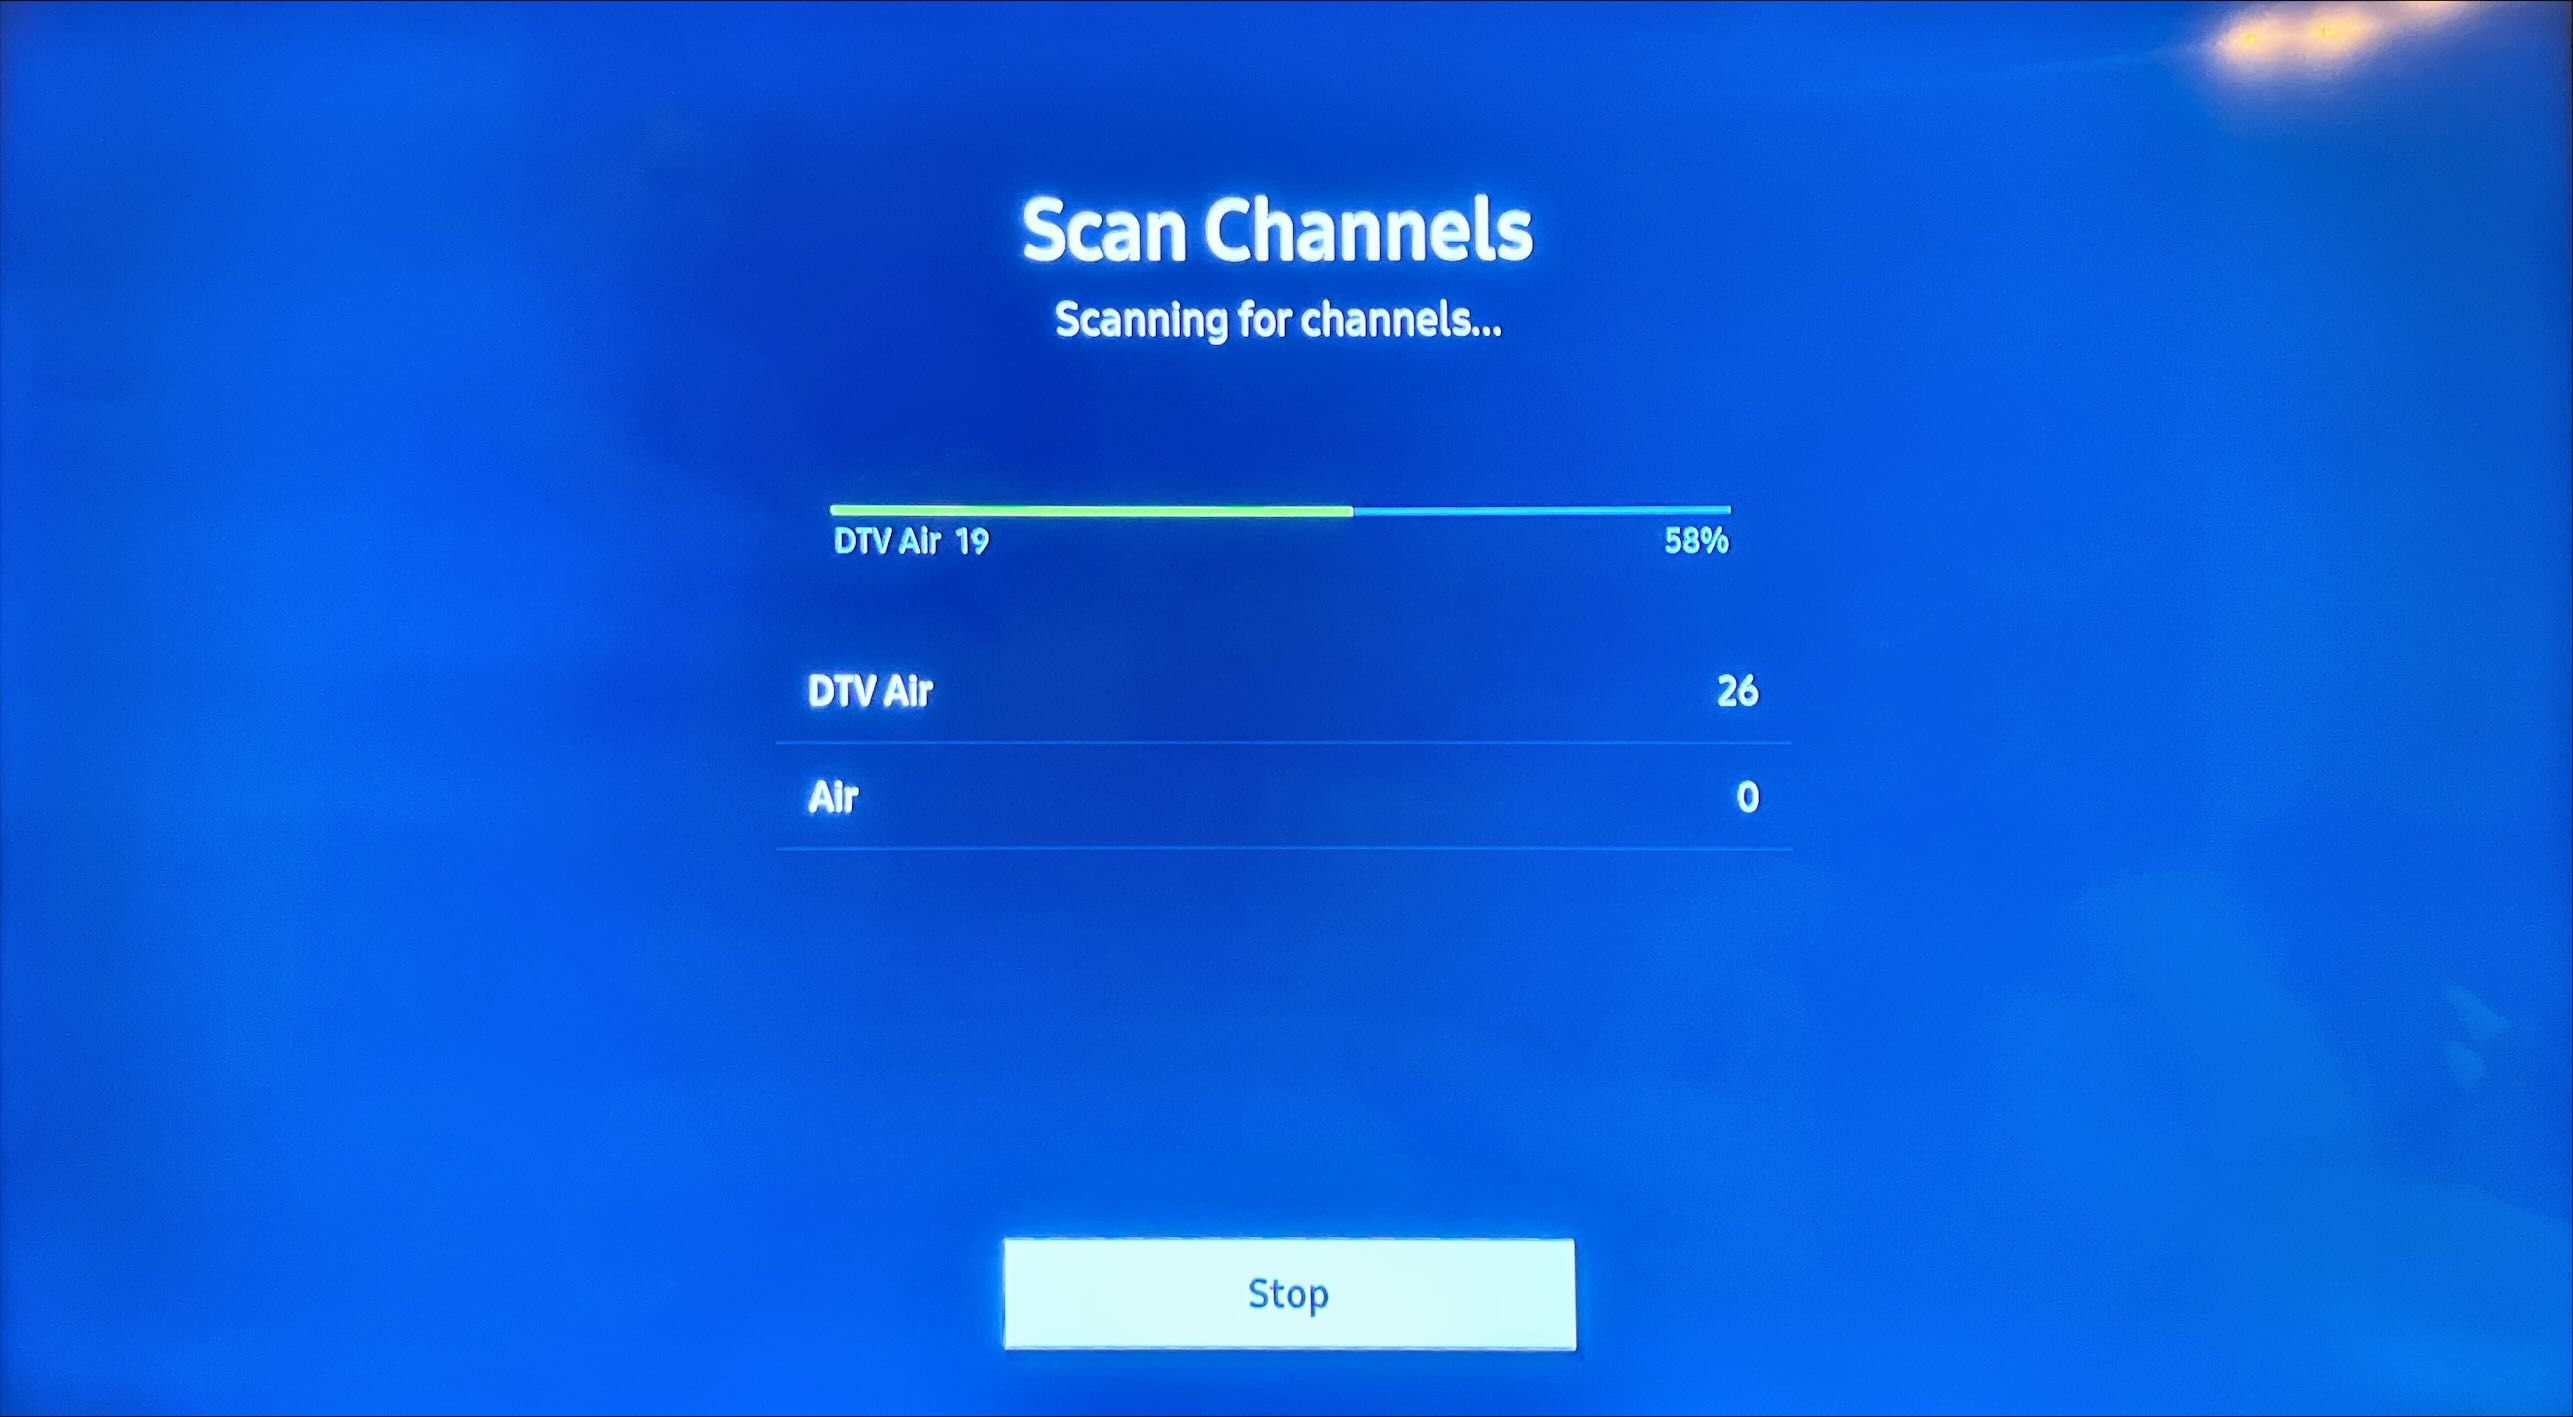 TV scanning for channels